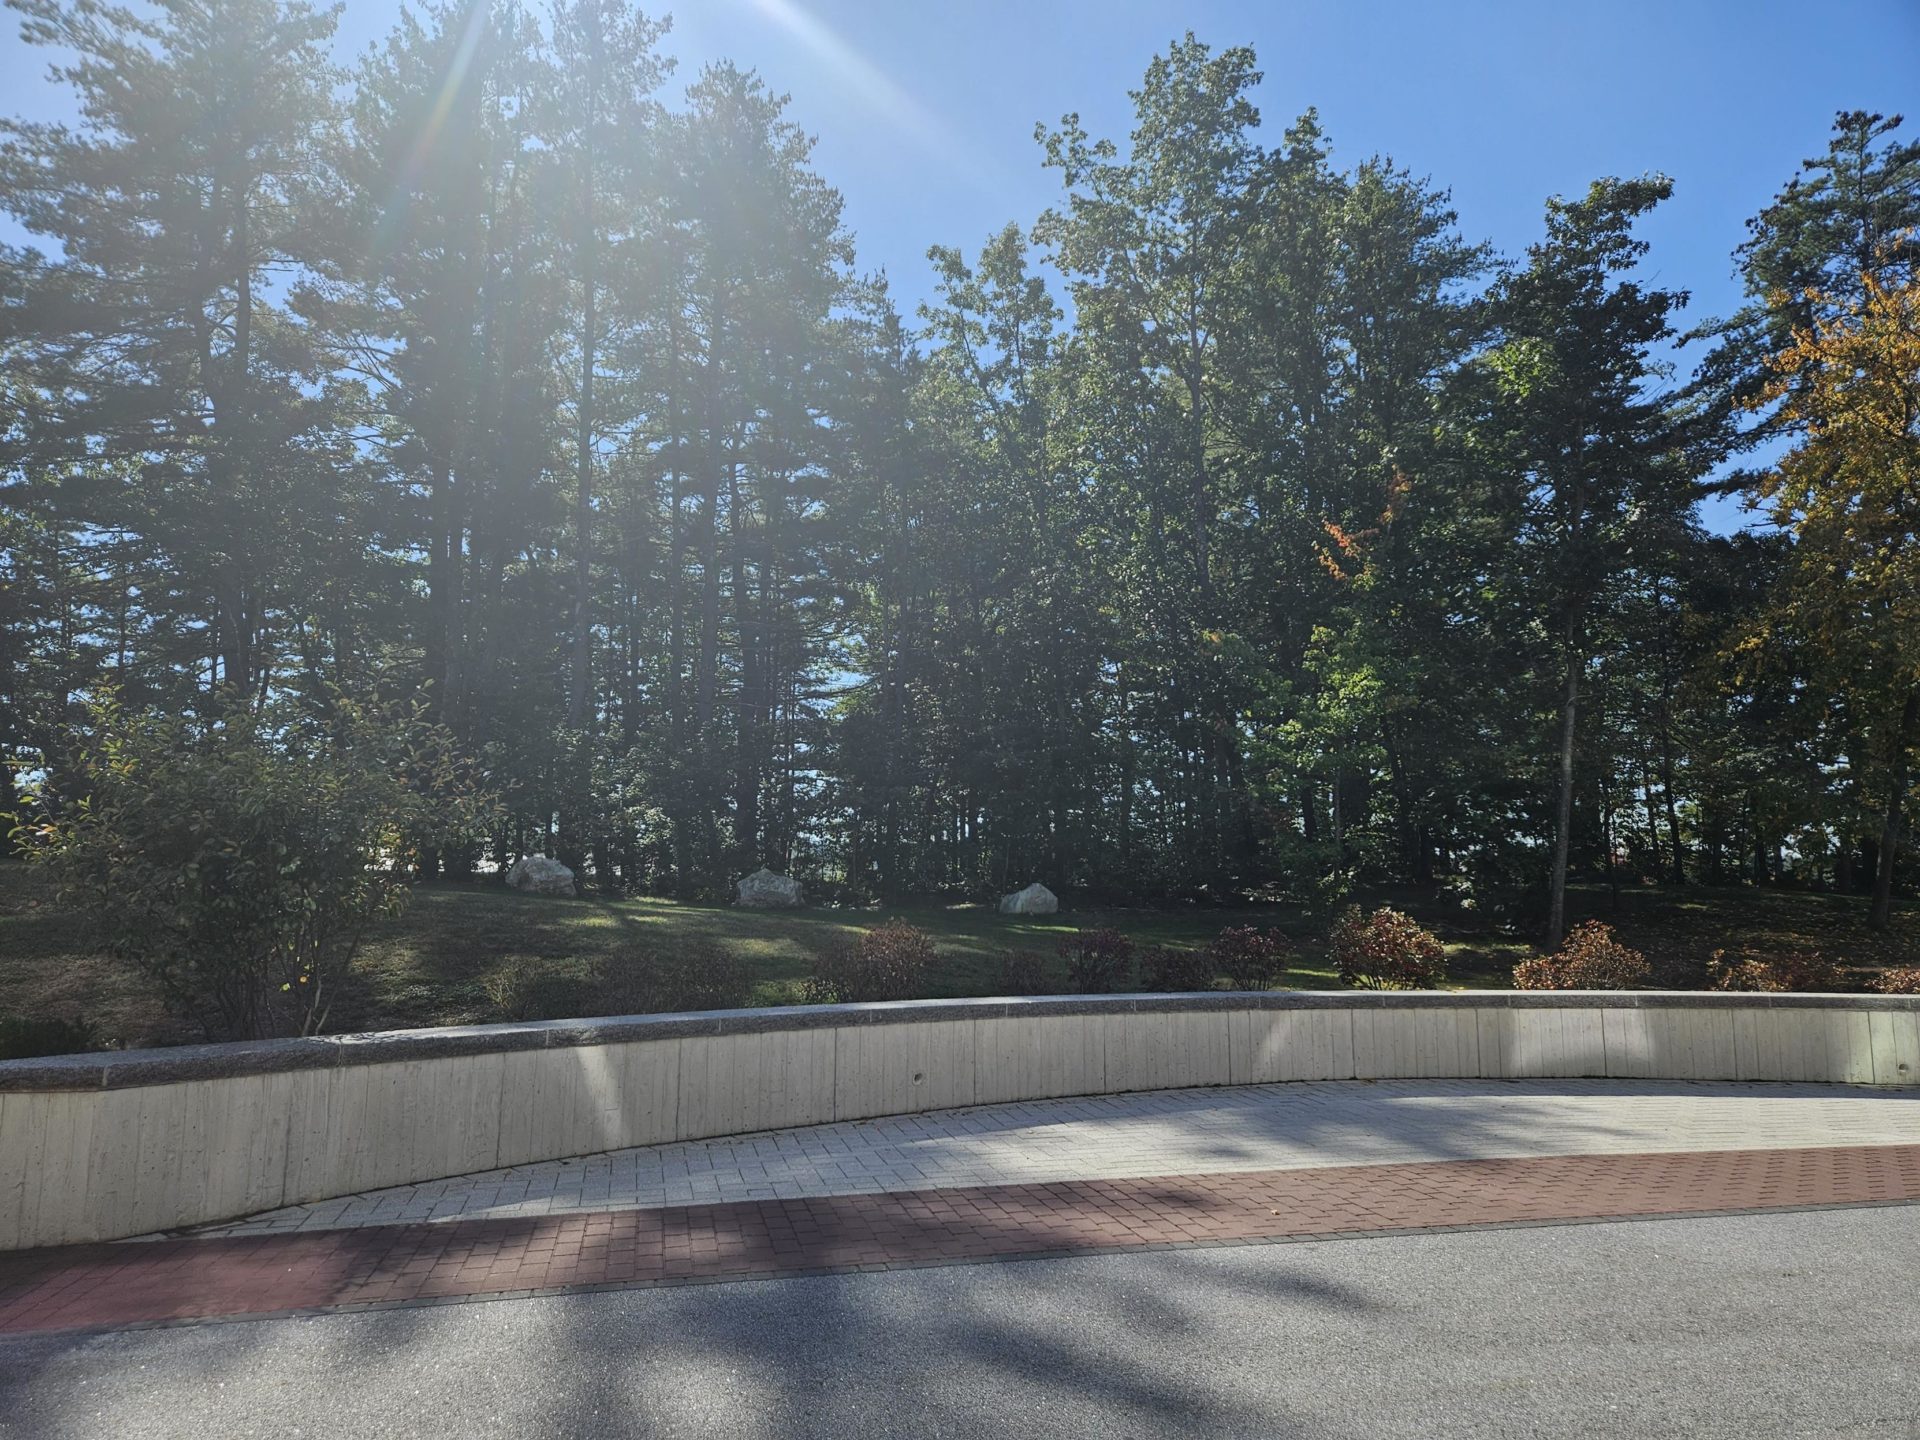 Fall Foliage Spots Around Campus